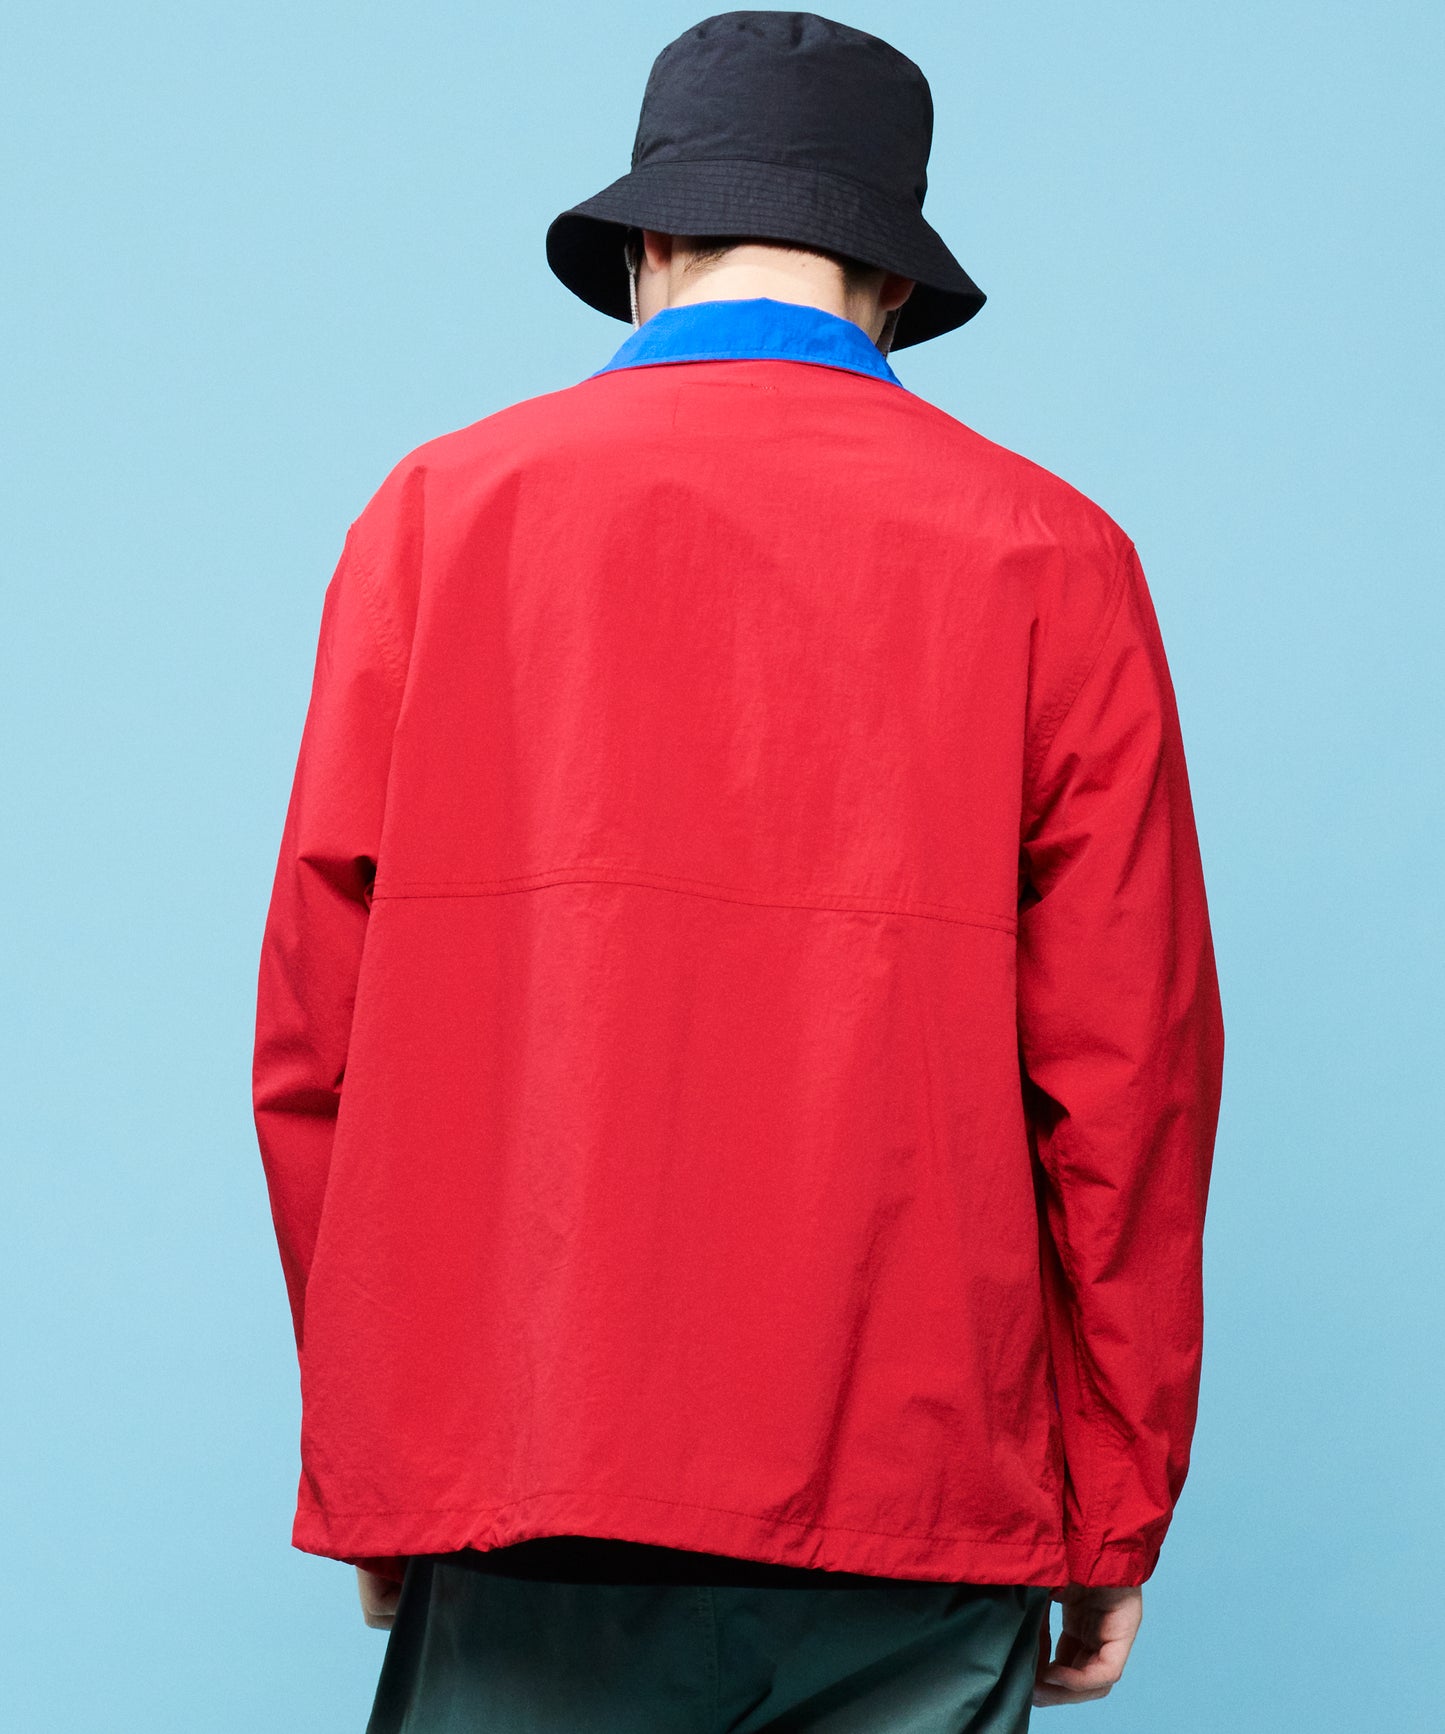 Retro color wind jacket / 撥水レトロカラーウインドジャケット